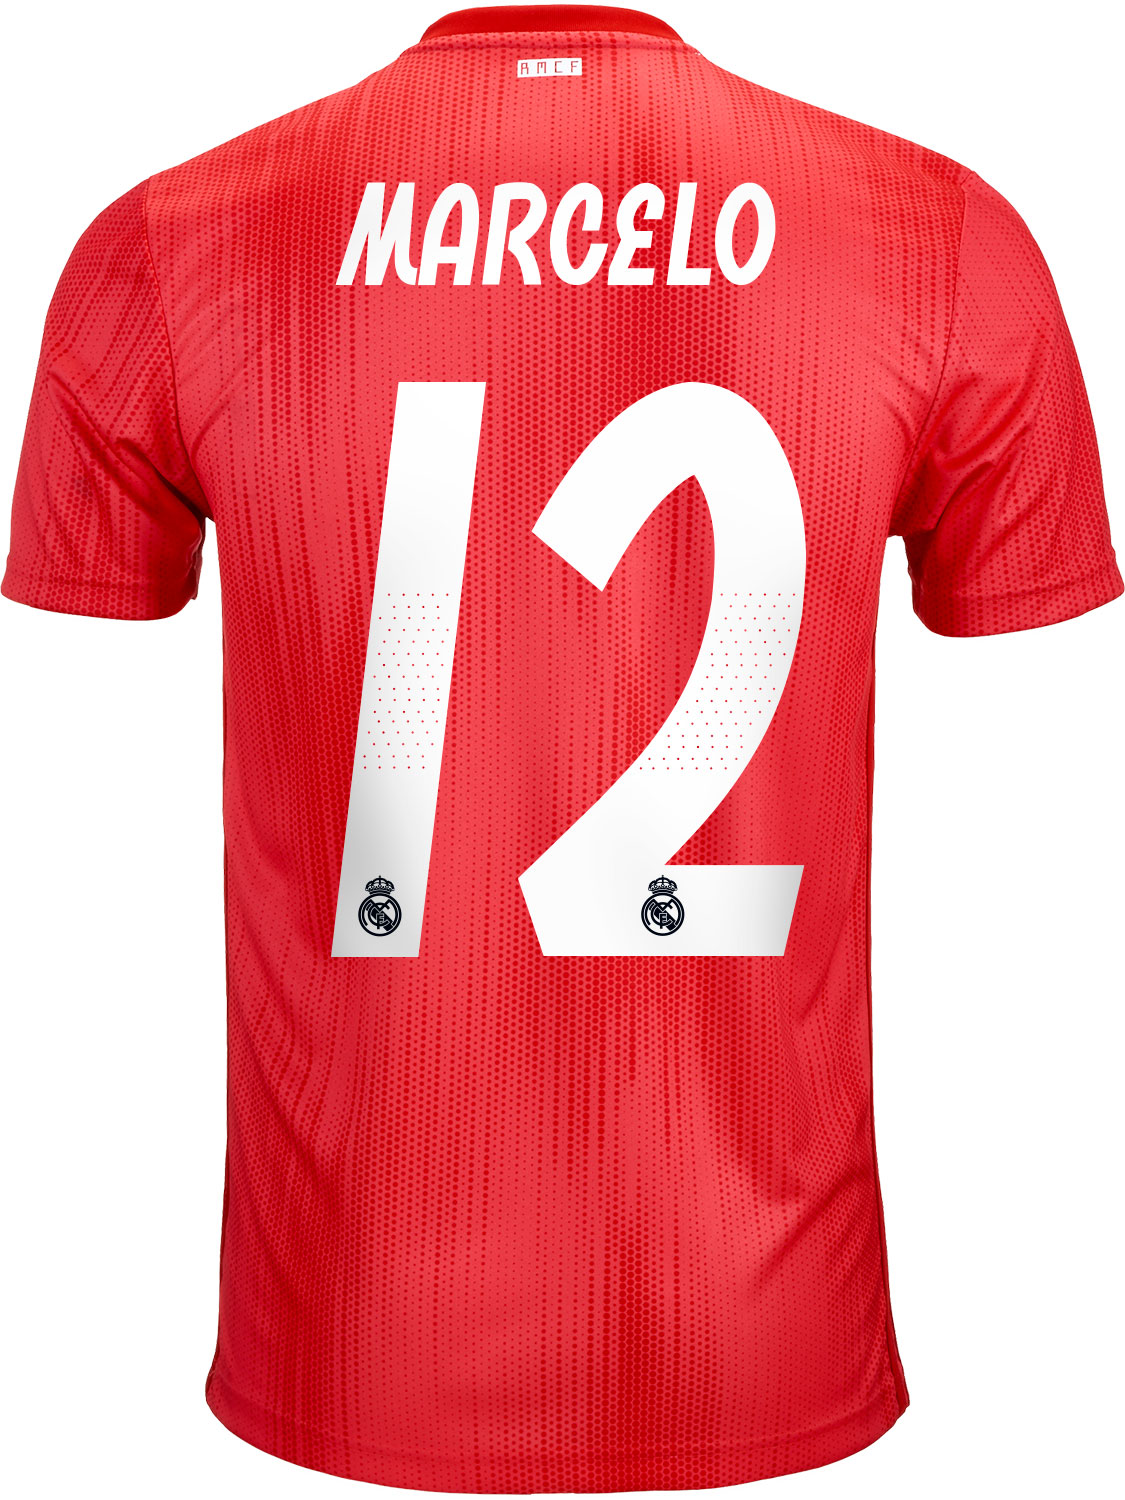 marcelo kit number